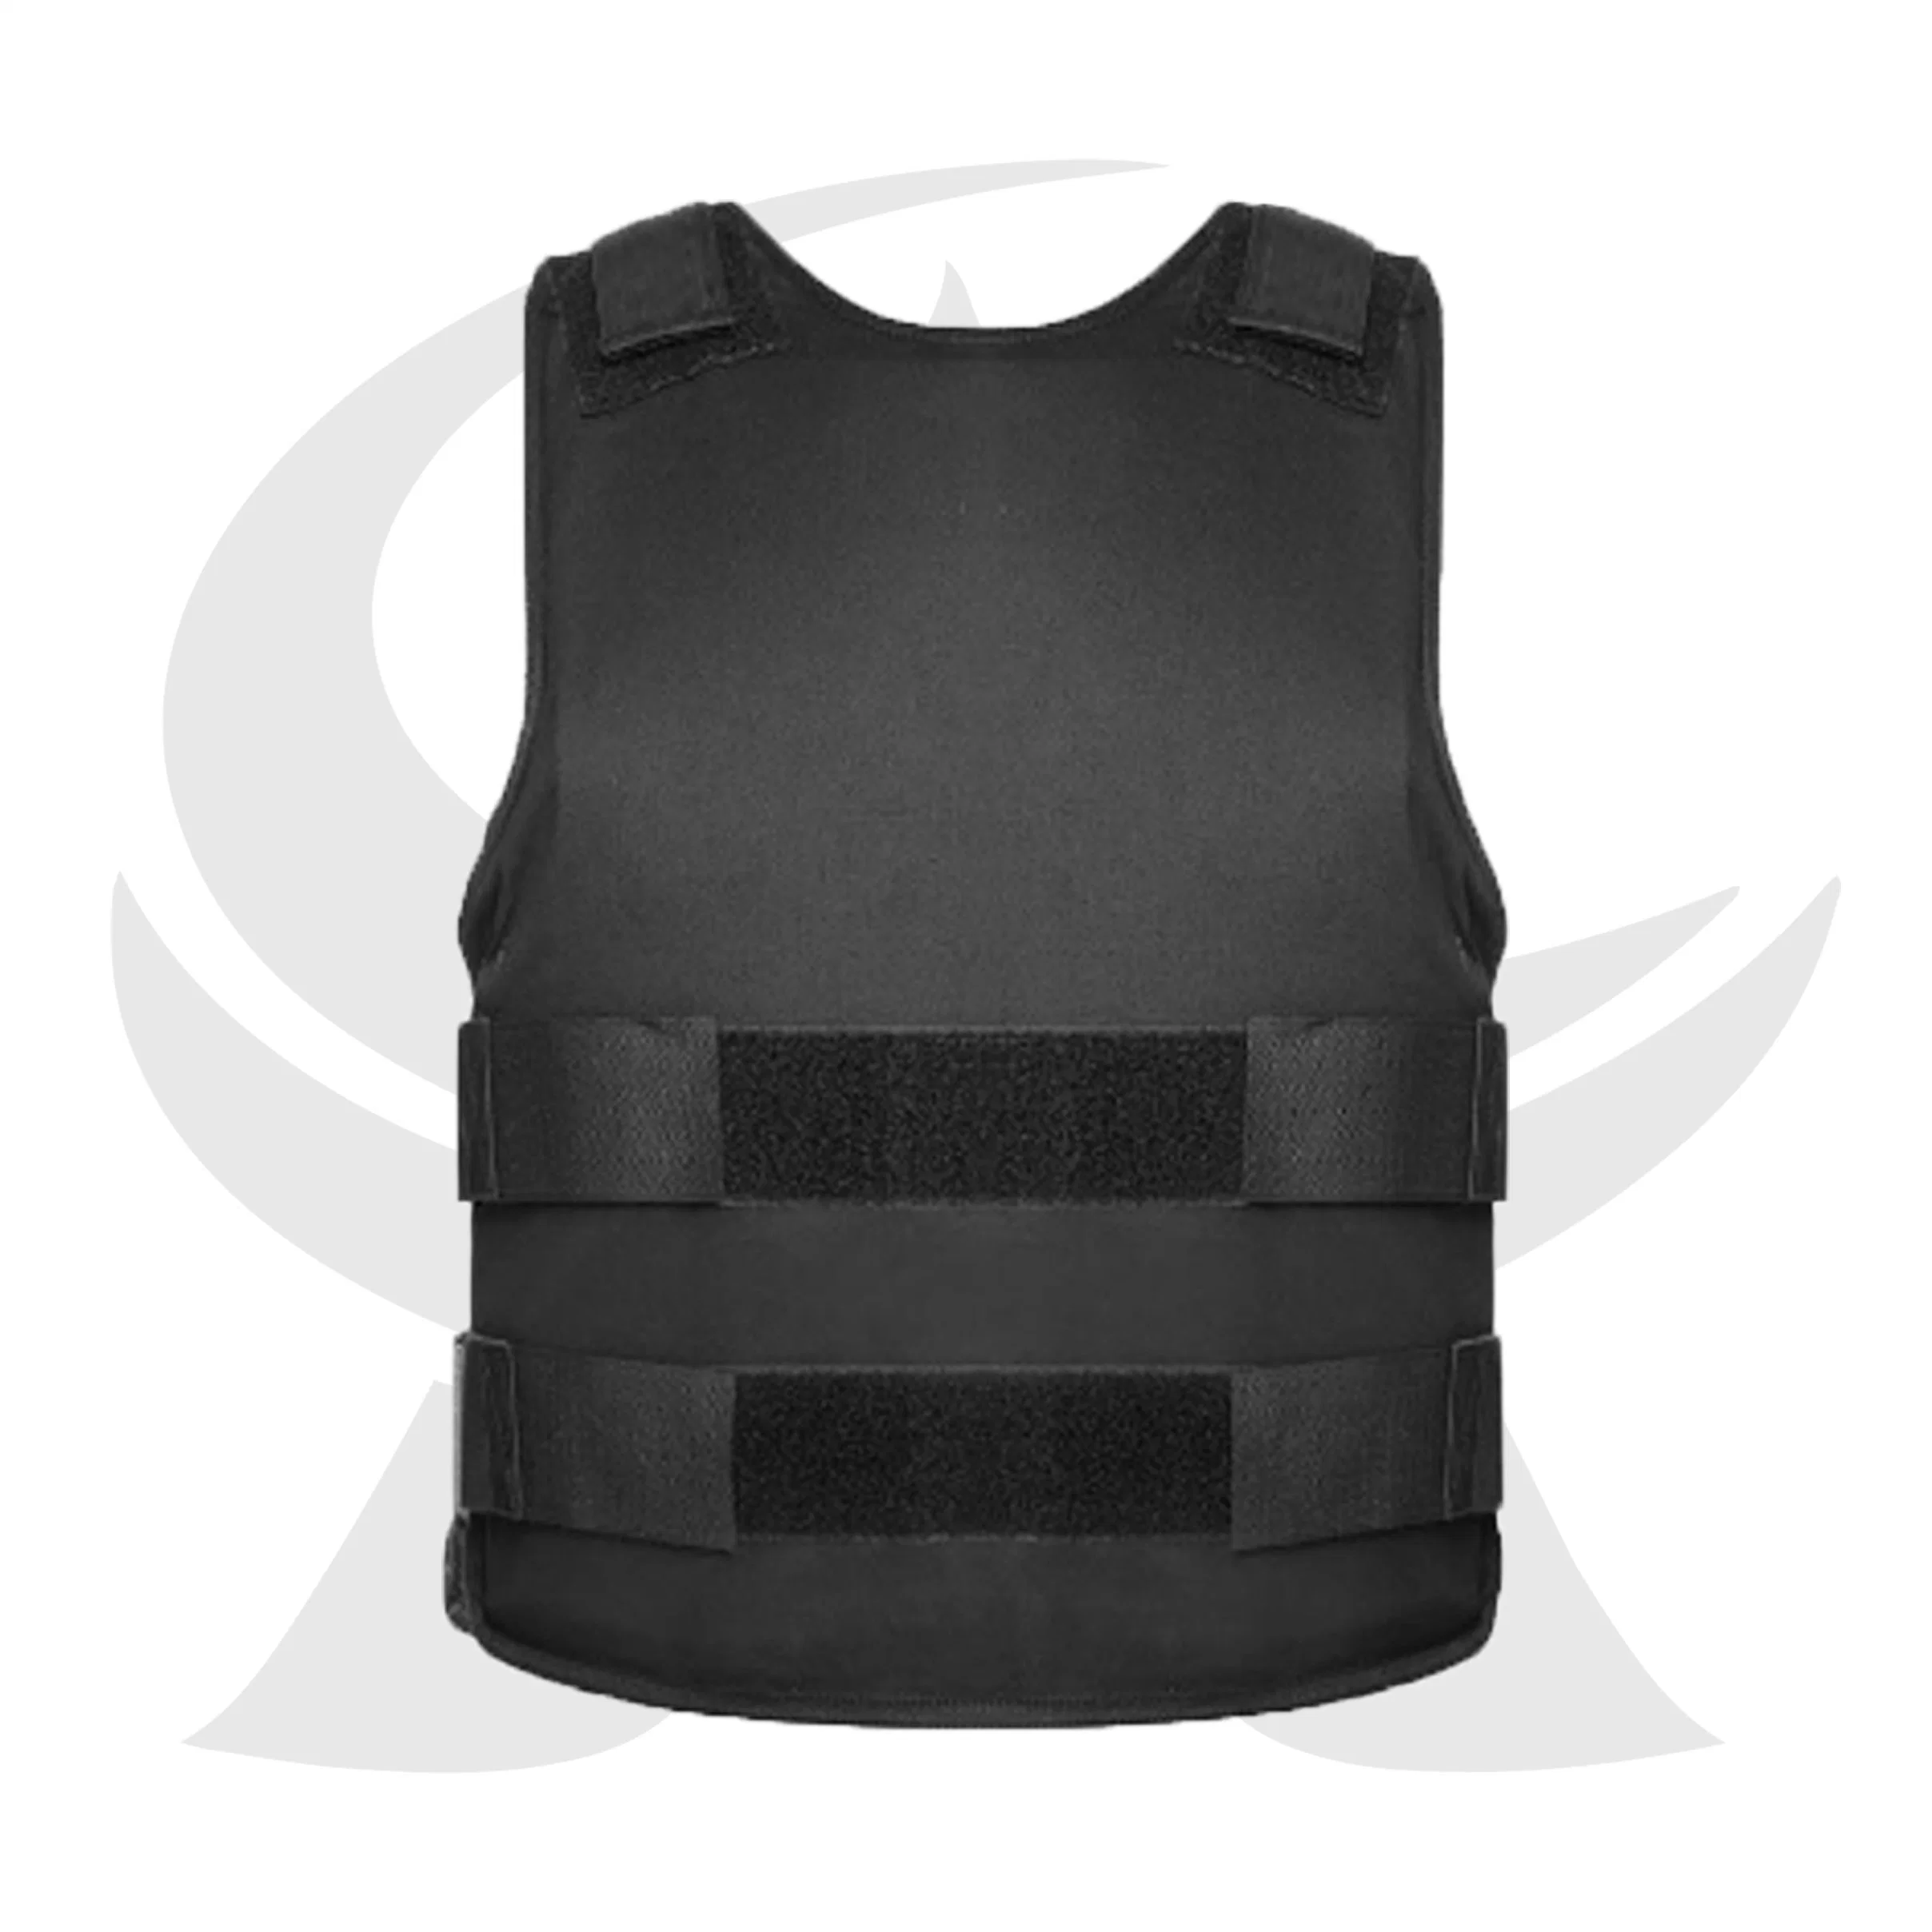 Bullet Proof Vest / Ballistic Vest Police Equipment / Tactical Gear/Camouflage Bullet Proof Vest